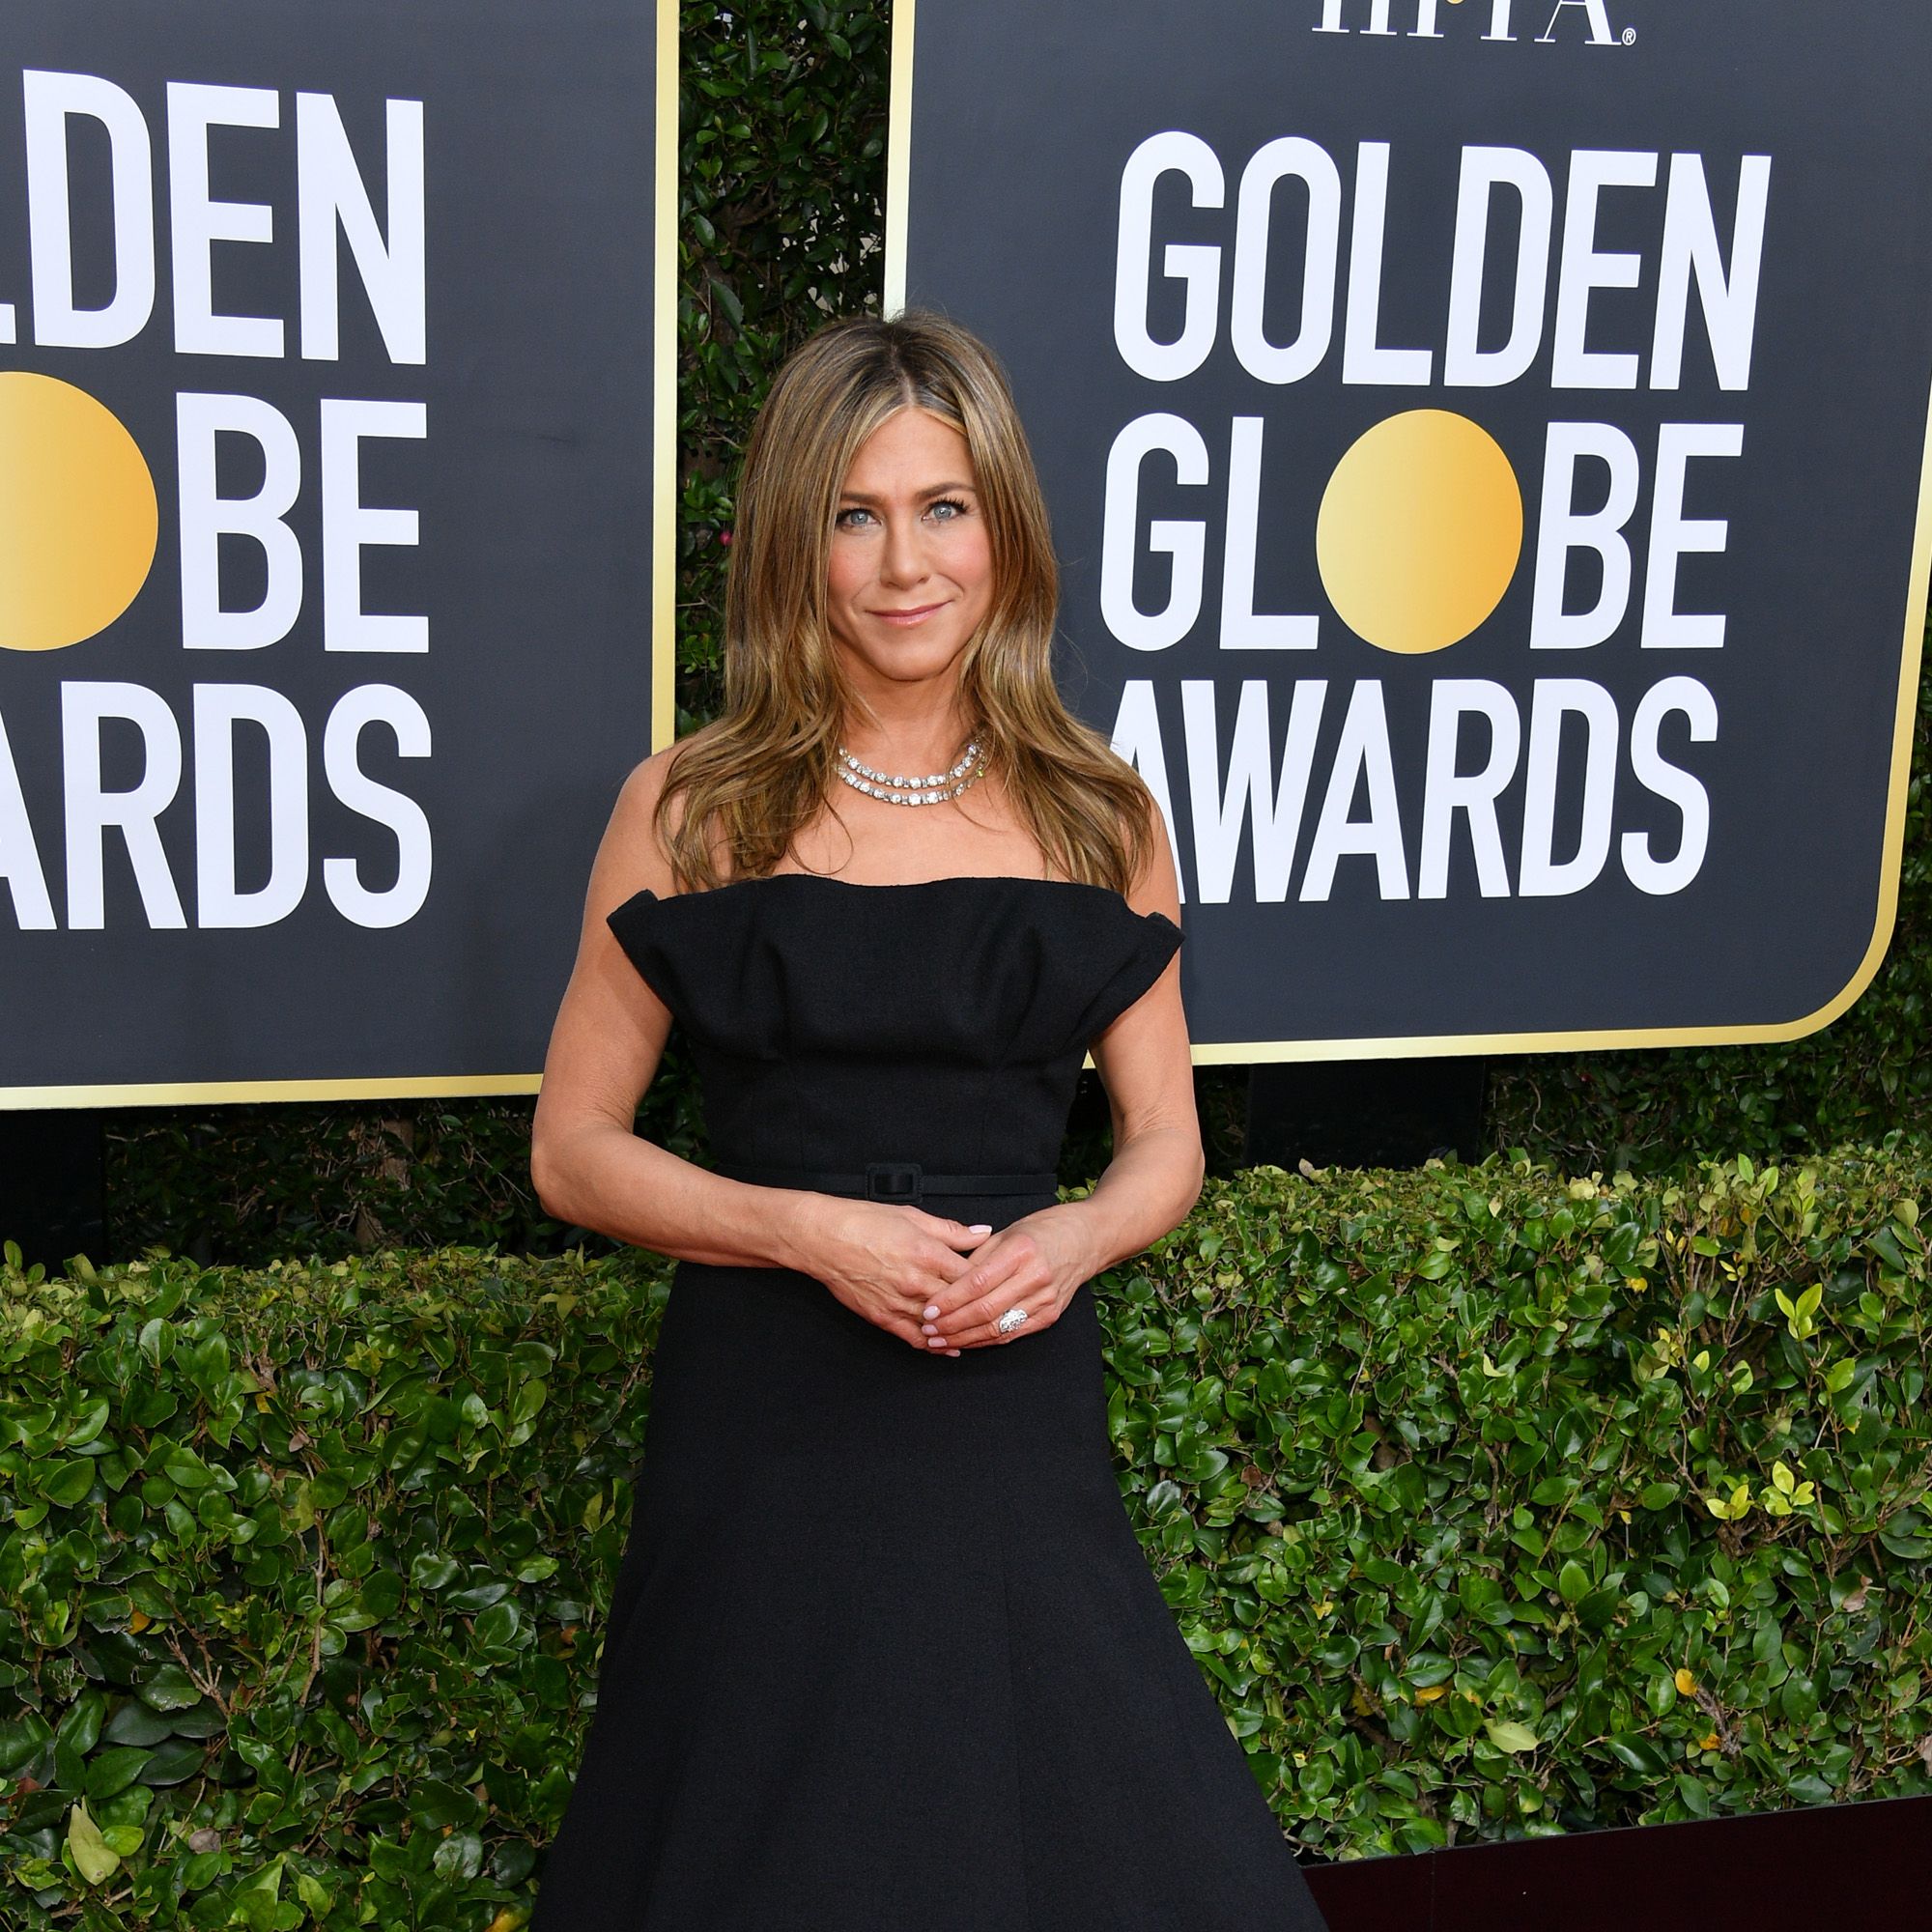 Jennifer Aniston's reaction to Brad Pitt's Golden Globes acceptance speech